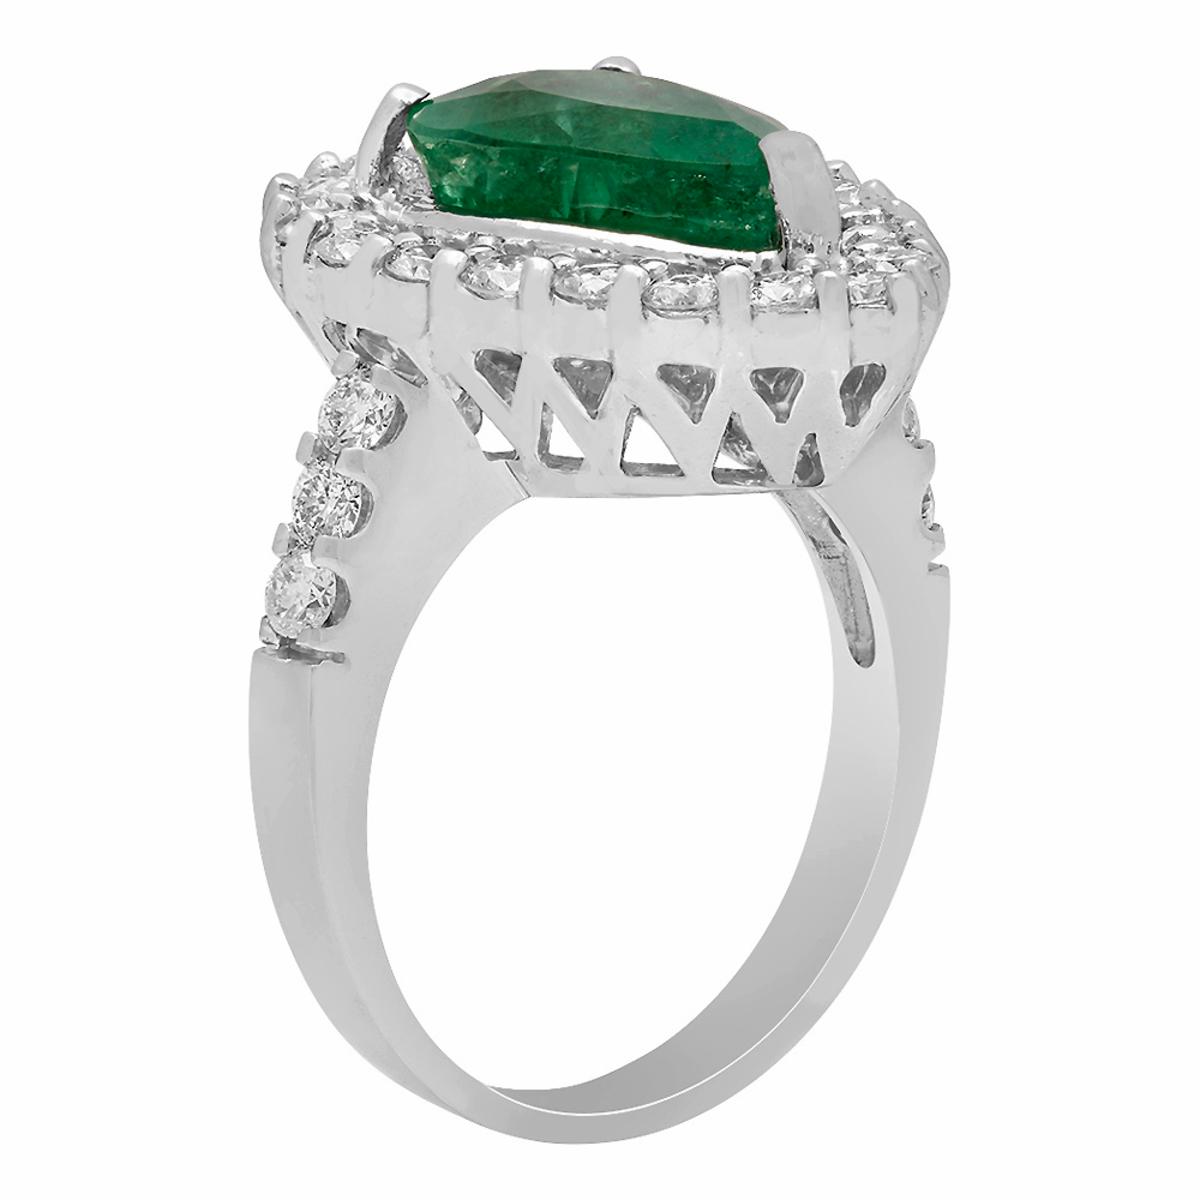 14k White Gold 3.71ct Emerald 1.39ct Diamond Ring